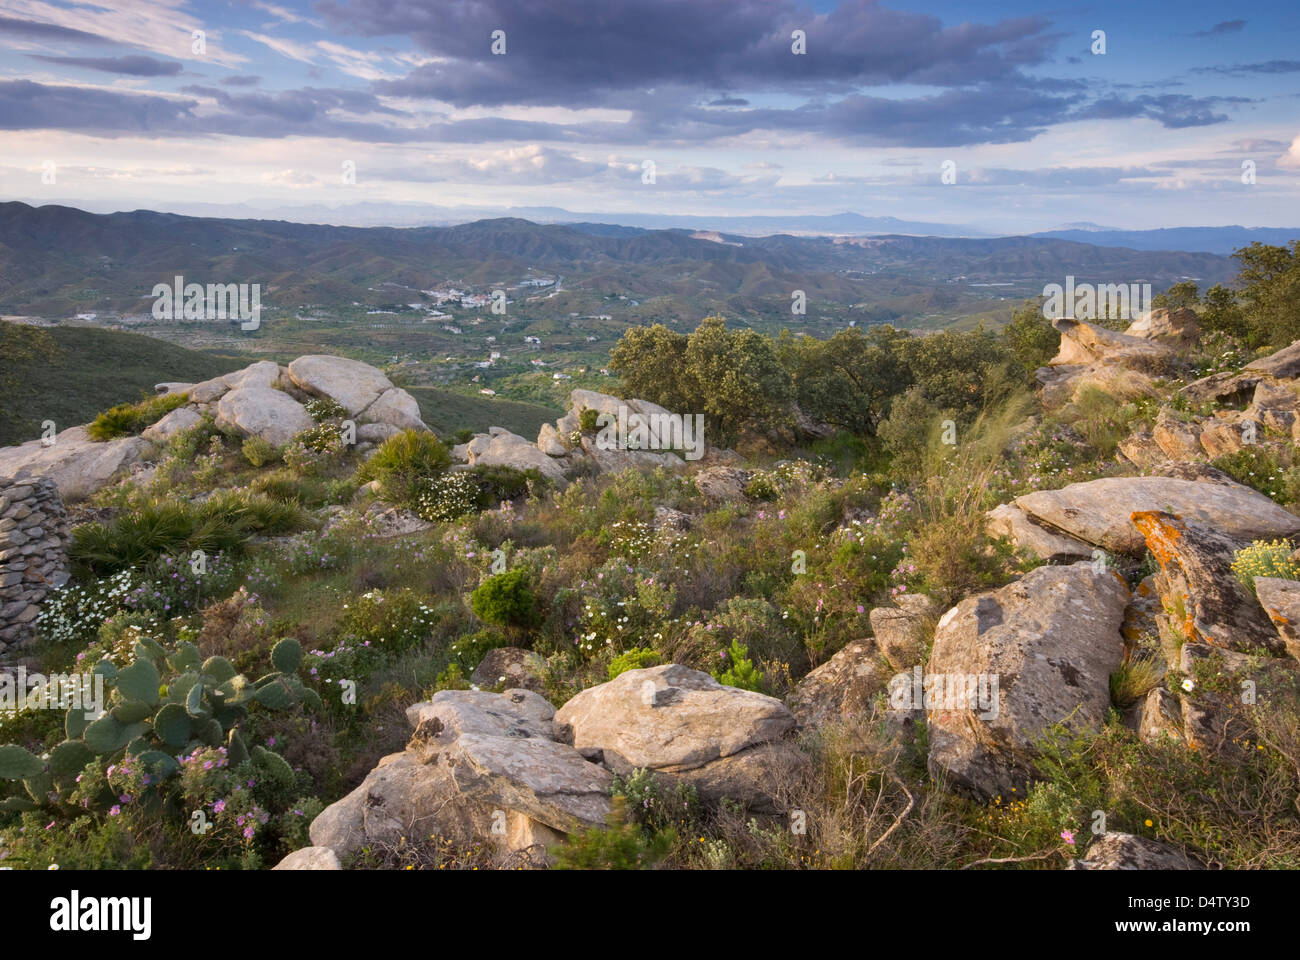 Northward View from Sierra de la Atalaya, Adalusia; Almeria province, Spain Stock Photo